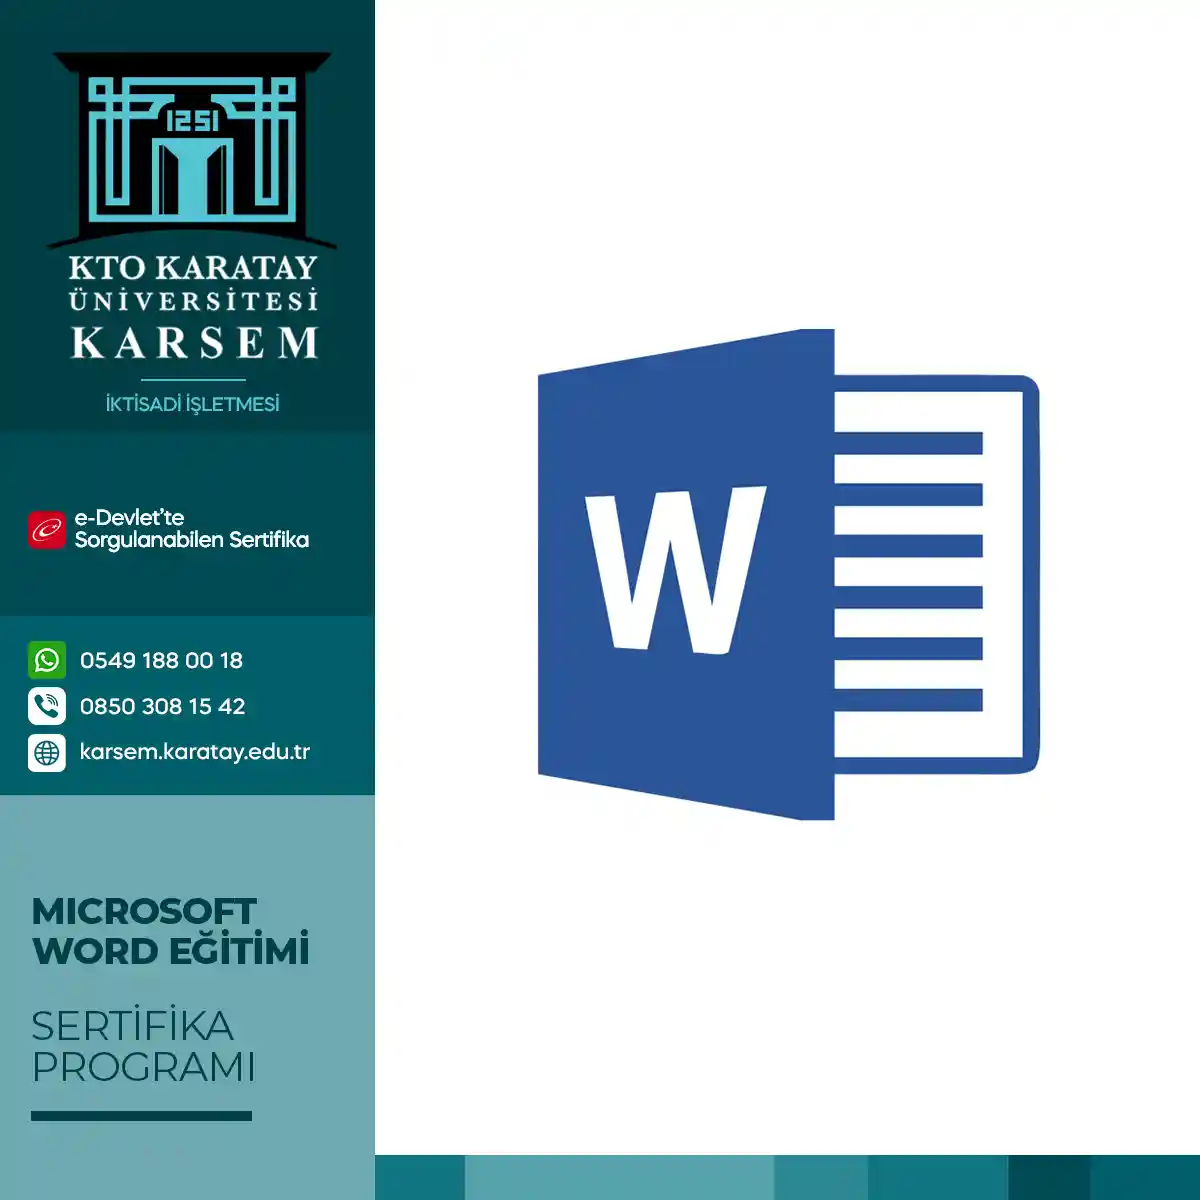 Microsoft Word Eğitimi Sertifika Programı